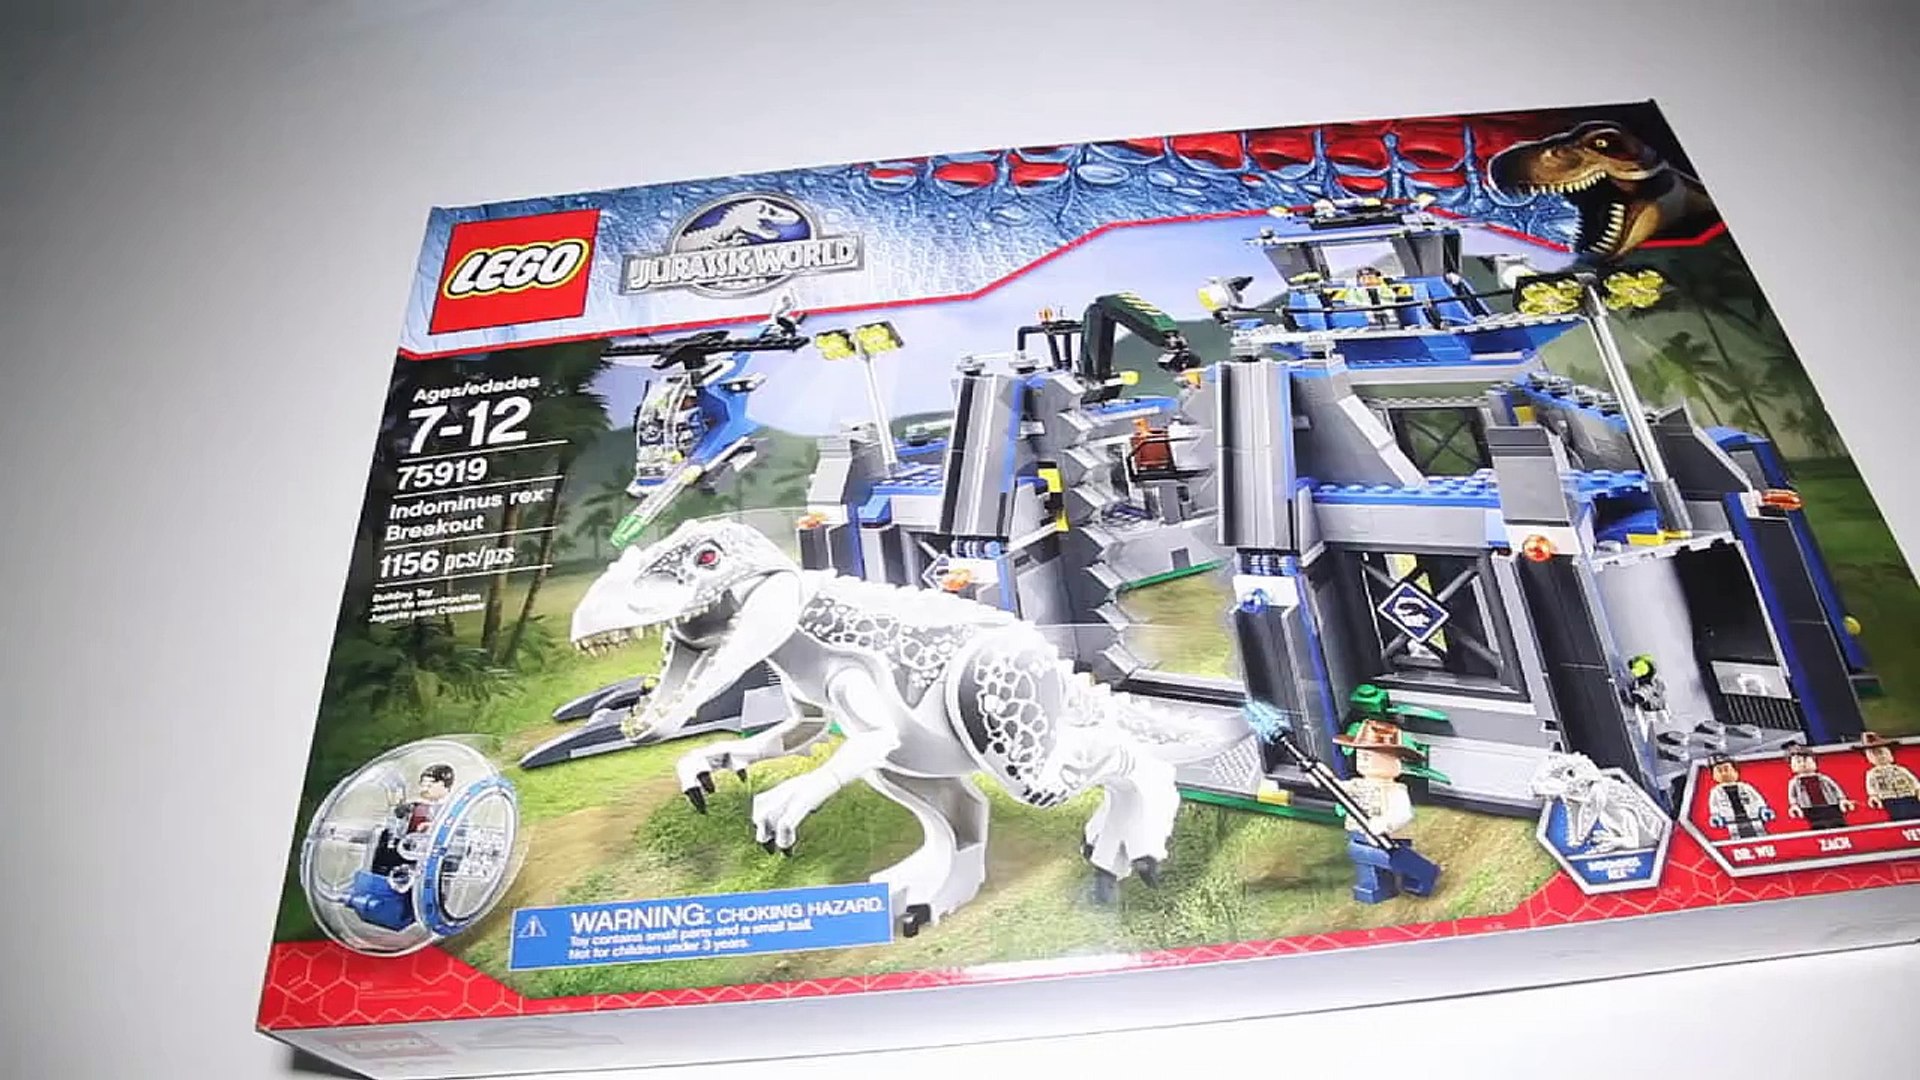 Interaktion Komprimere Premier Lego Jurassic World Indominus Rex Breakout Speed Build Review (75919) -  video Dailymotion